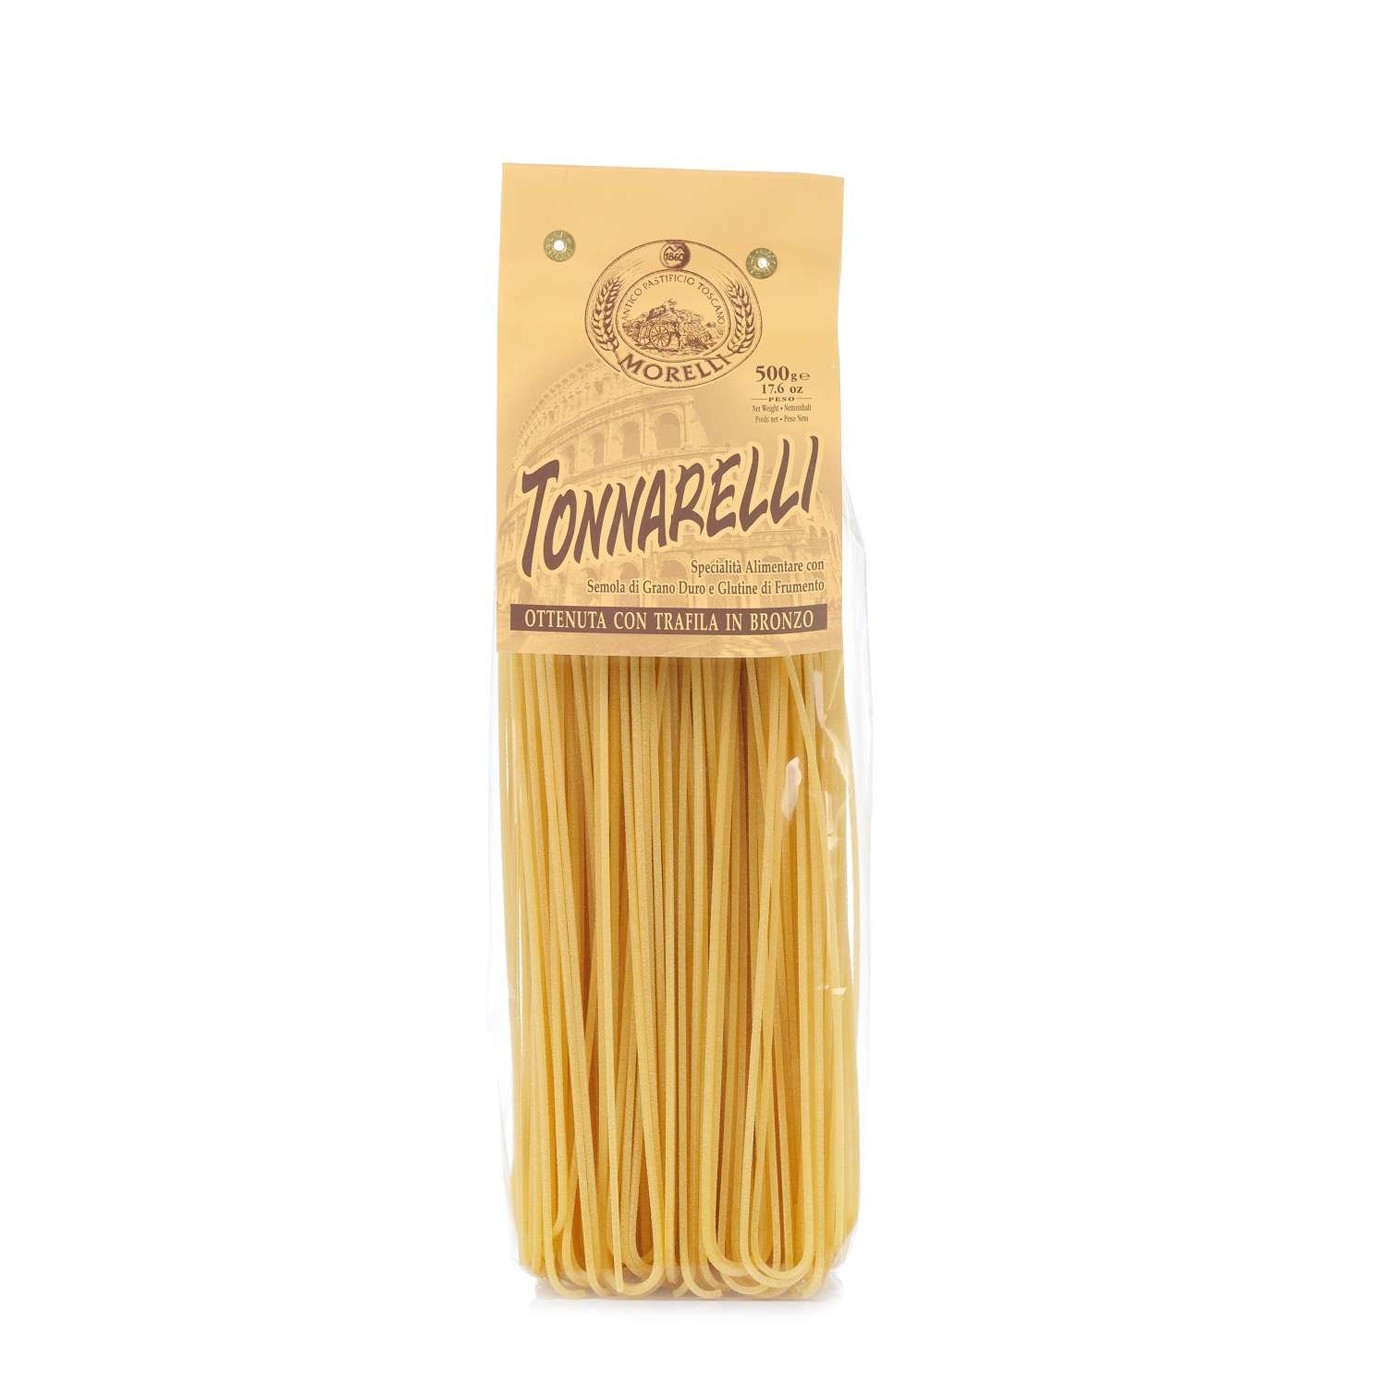 Tonnarello Spaghetti 17.6oz